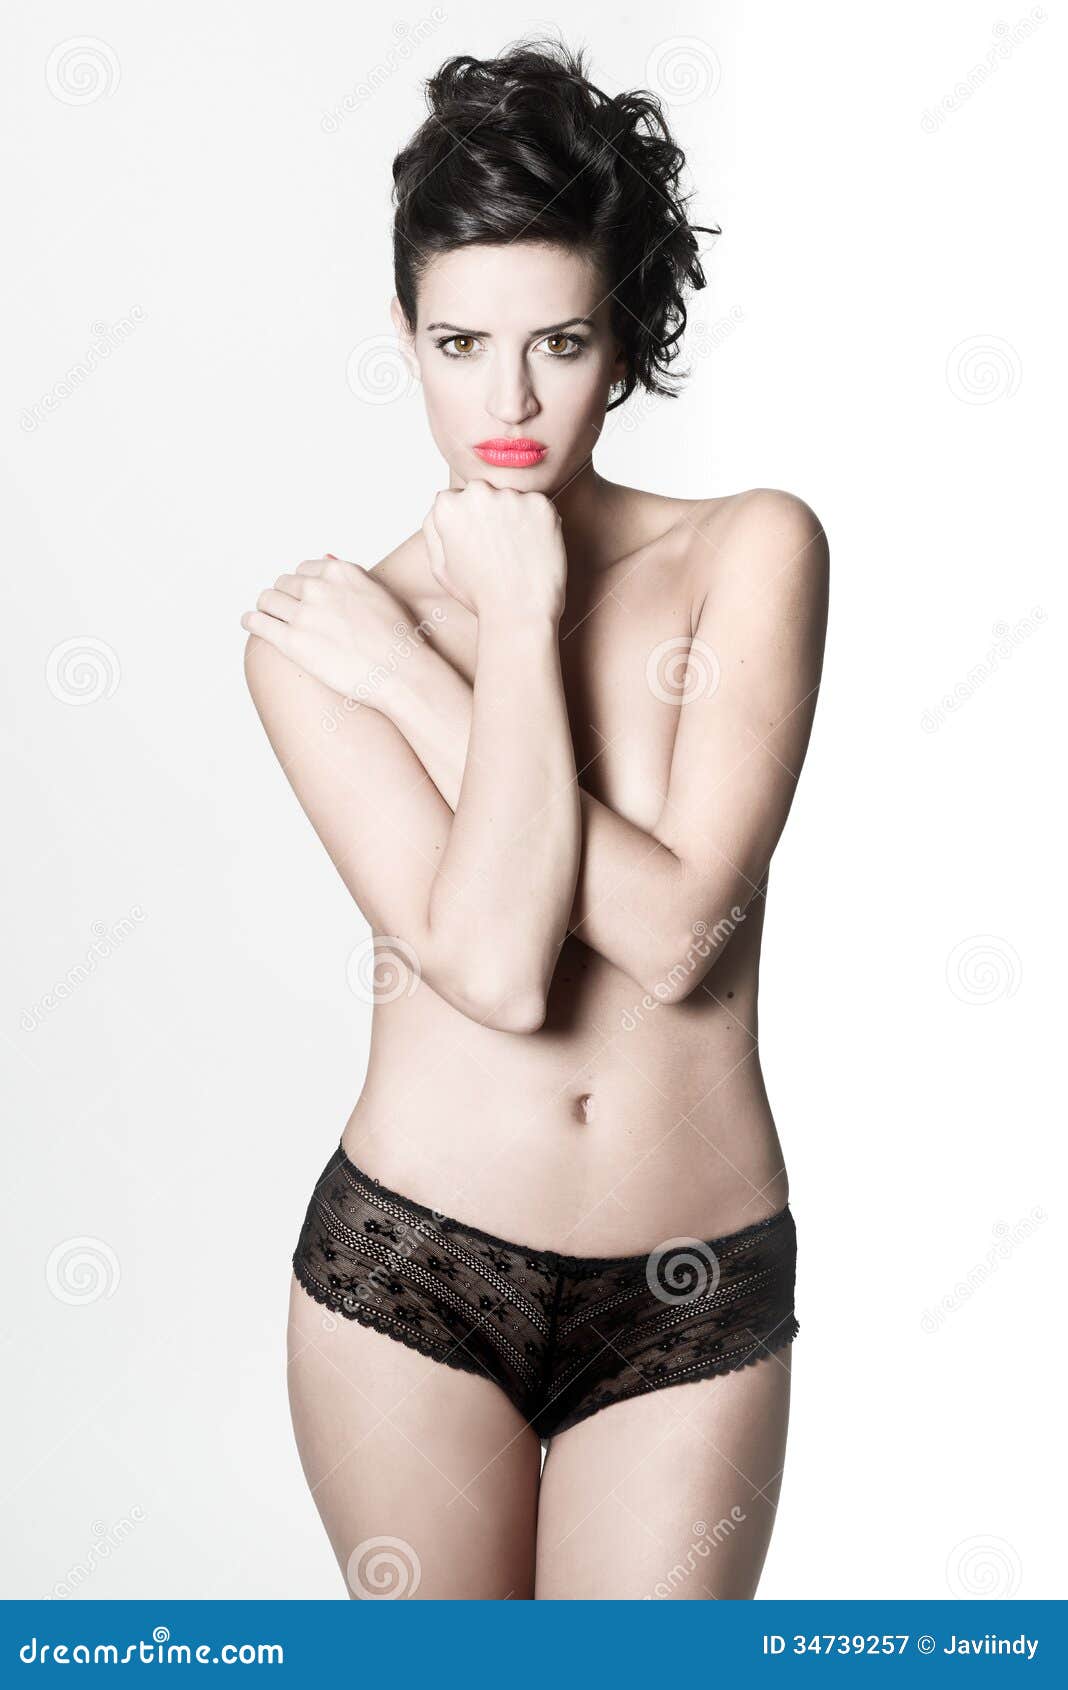 Beautiful Woman Wearing only Black Panties on White Background